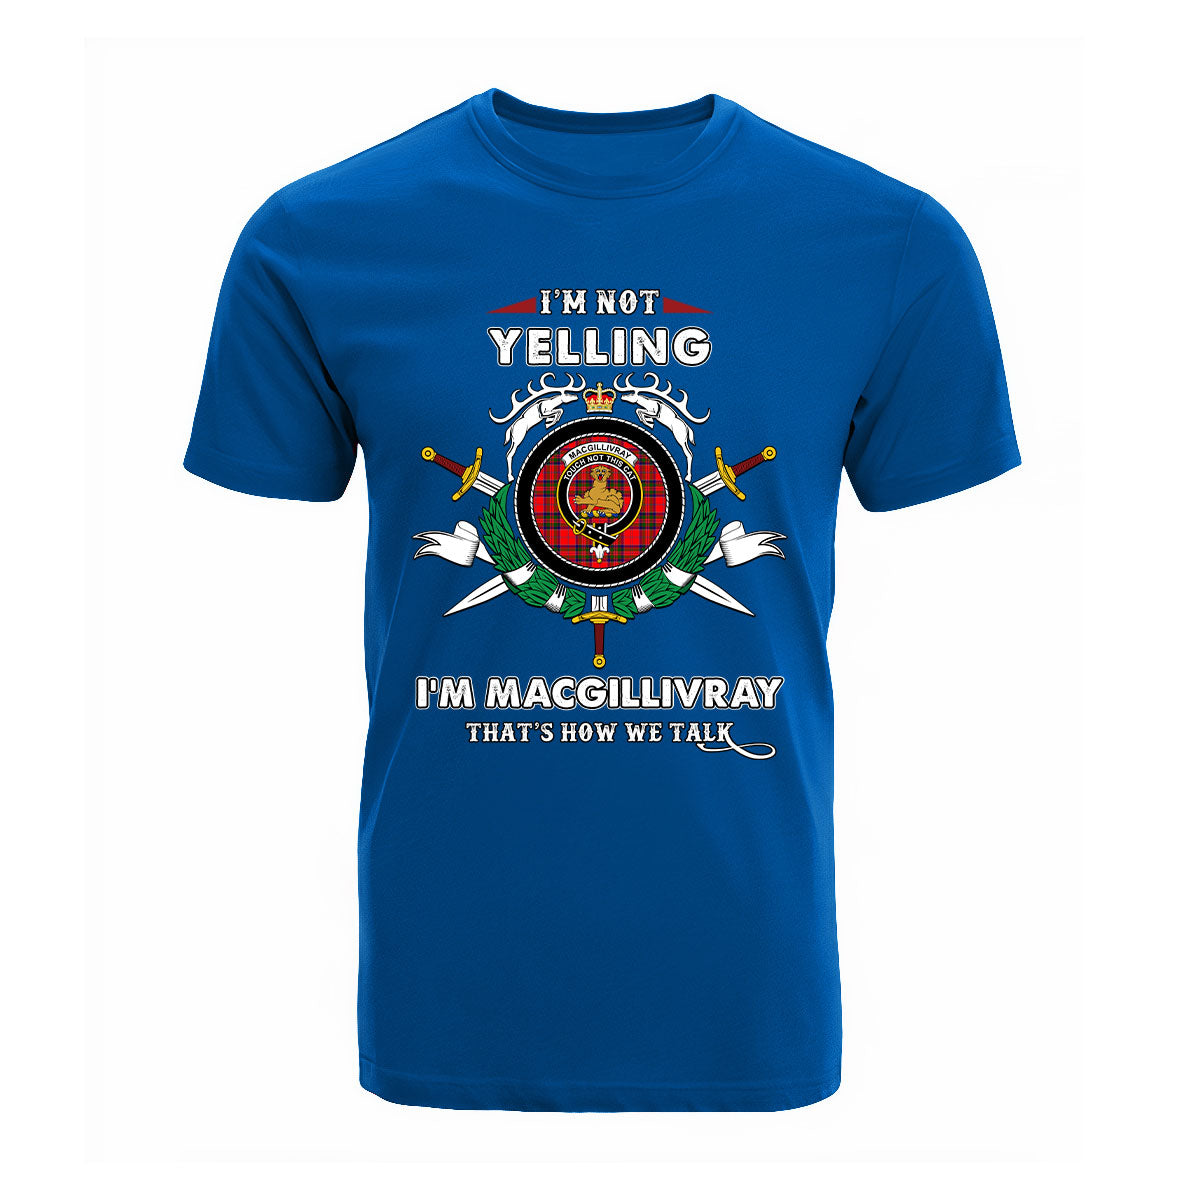 MacGillivray Tartan Crest T-shirt - I'm not yelling style